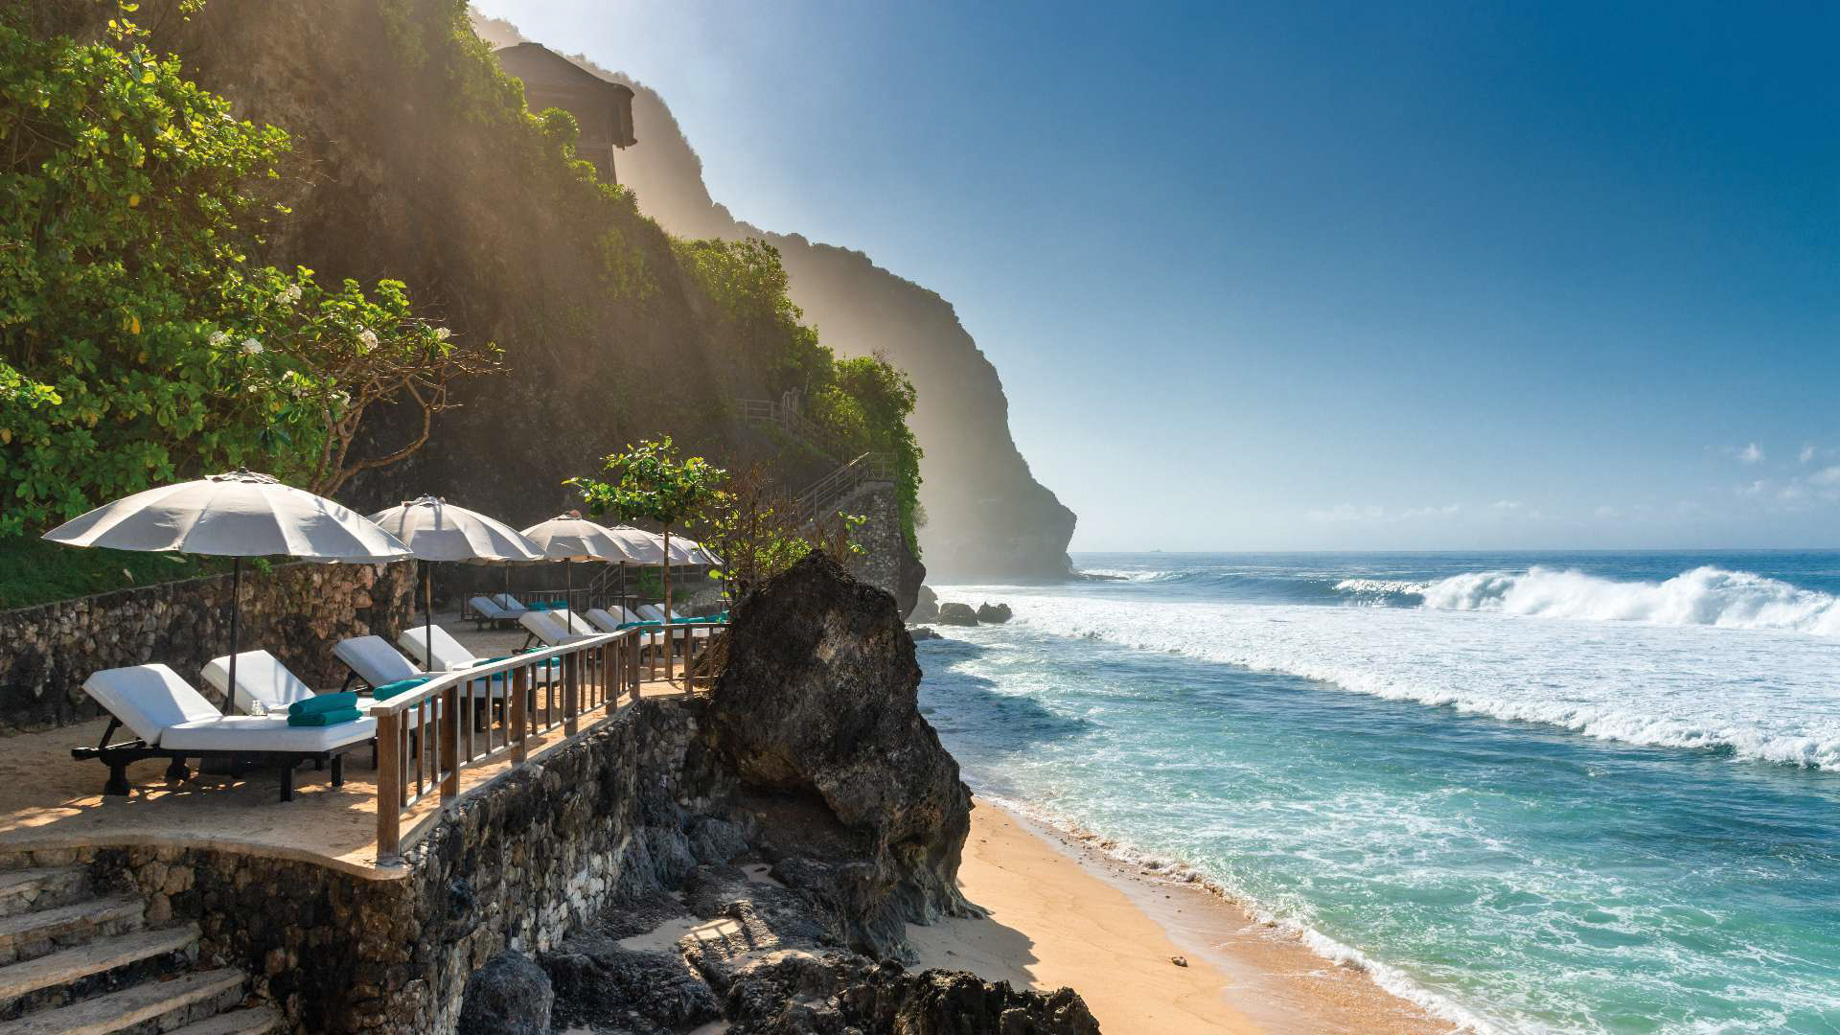 Bvlgari Resort Bali - Uluwatu, Bali, Indonesia - Resort Private Beach Deck